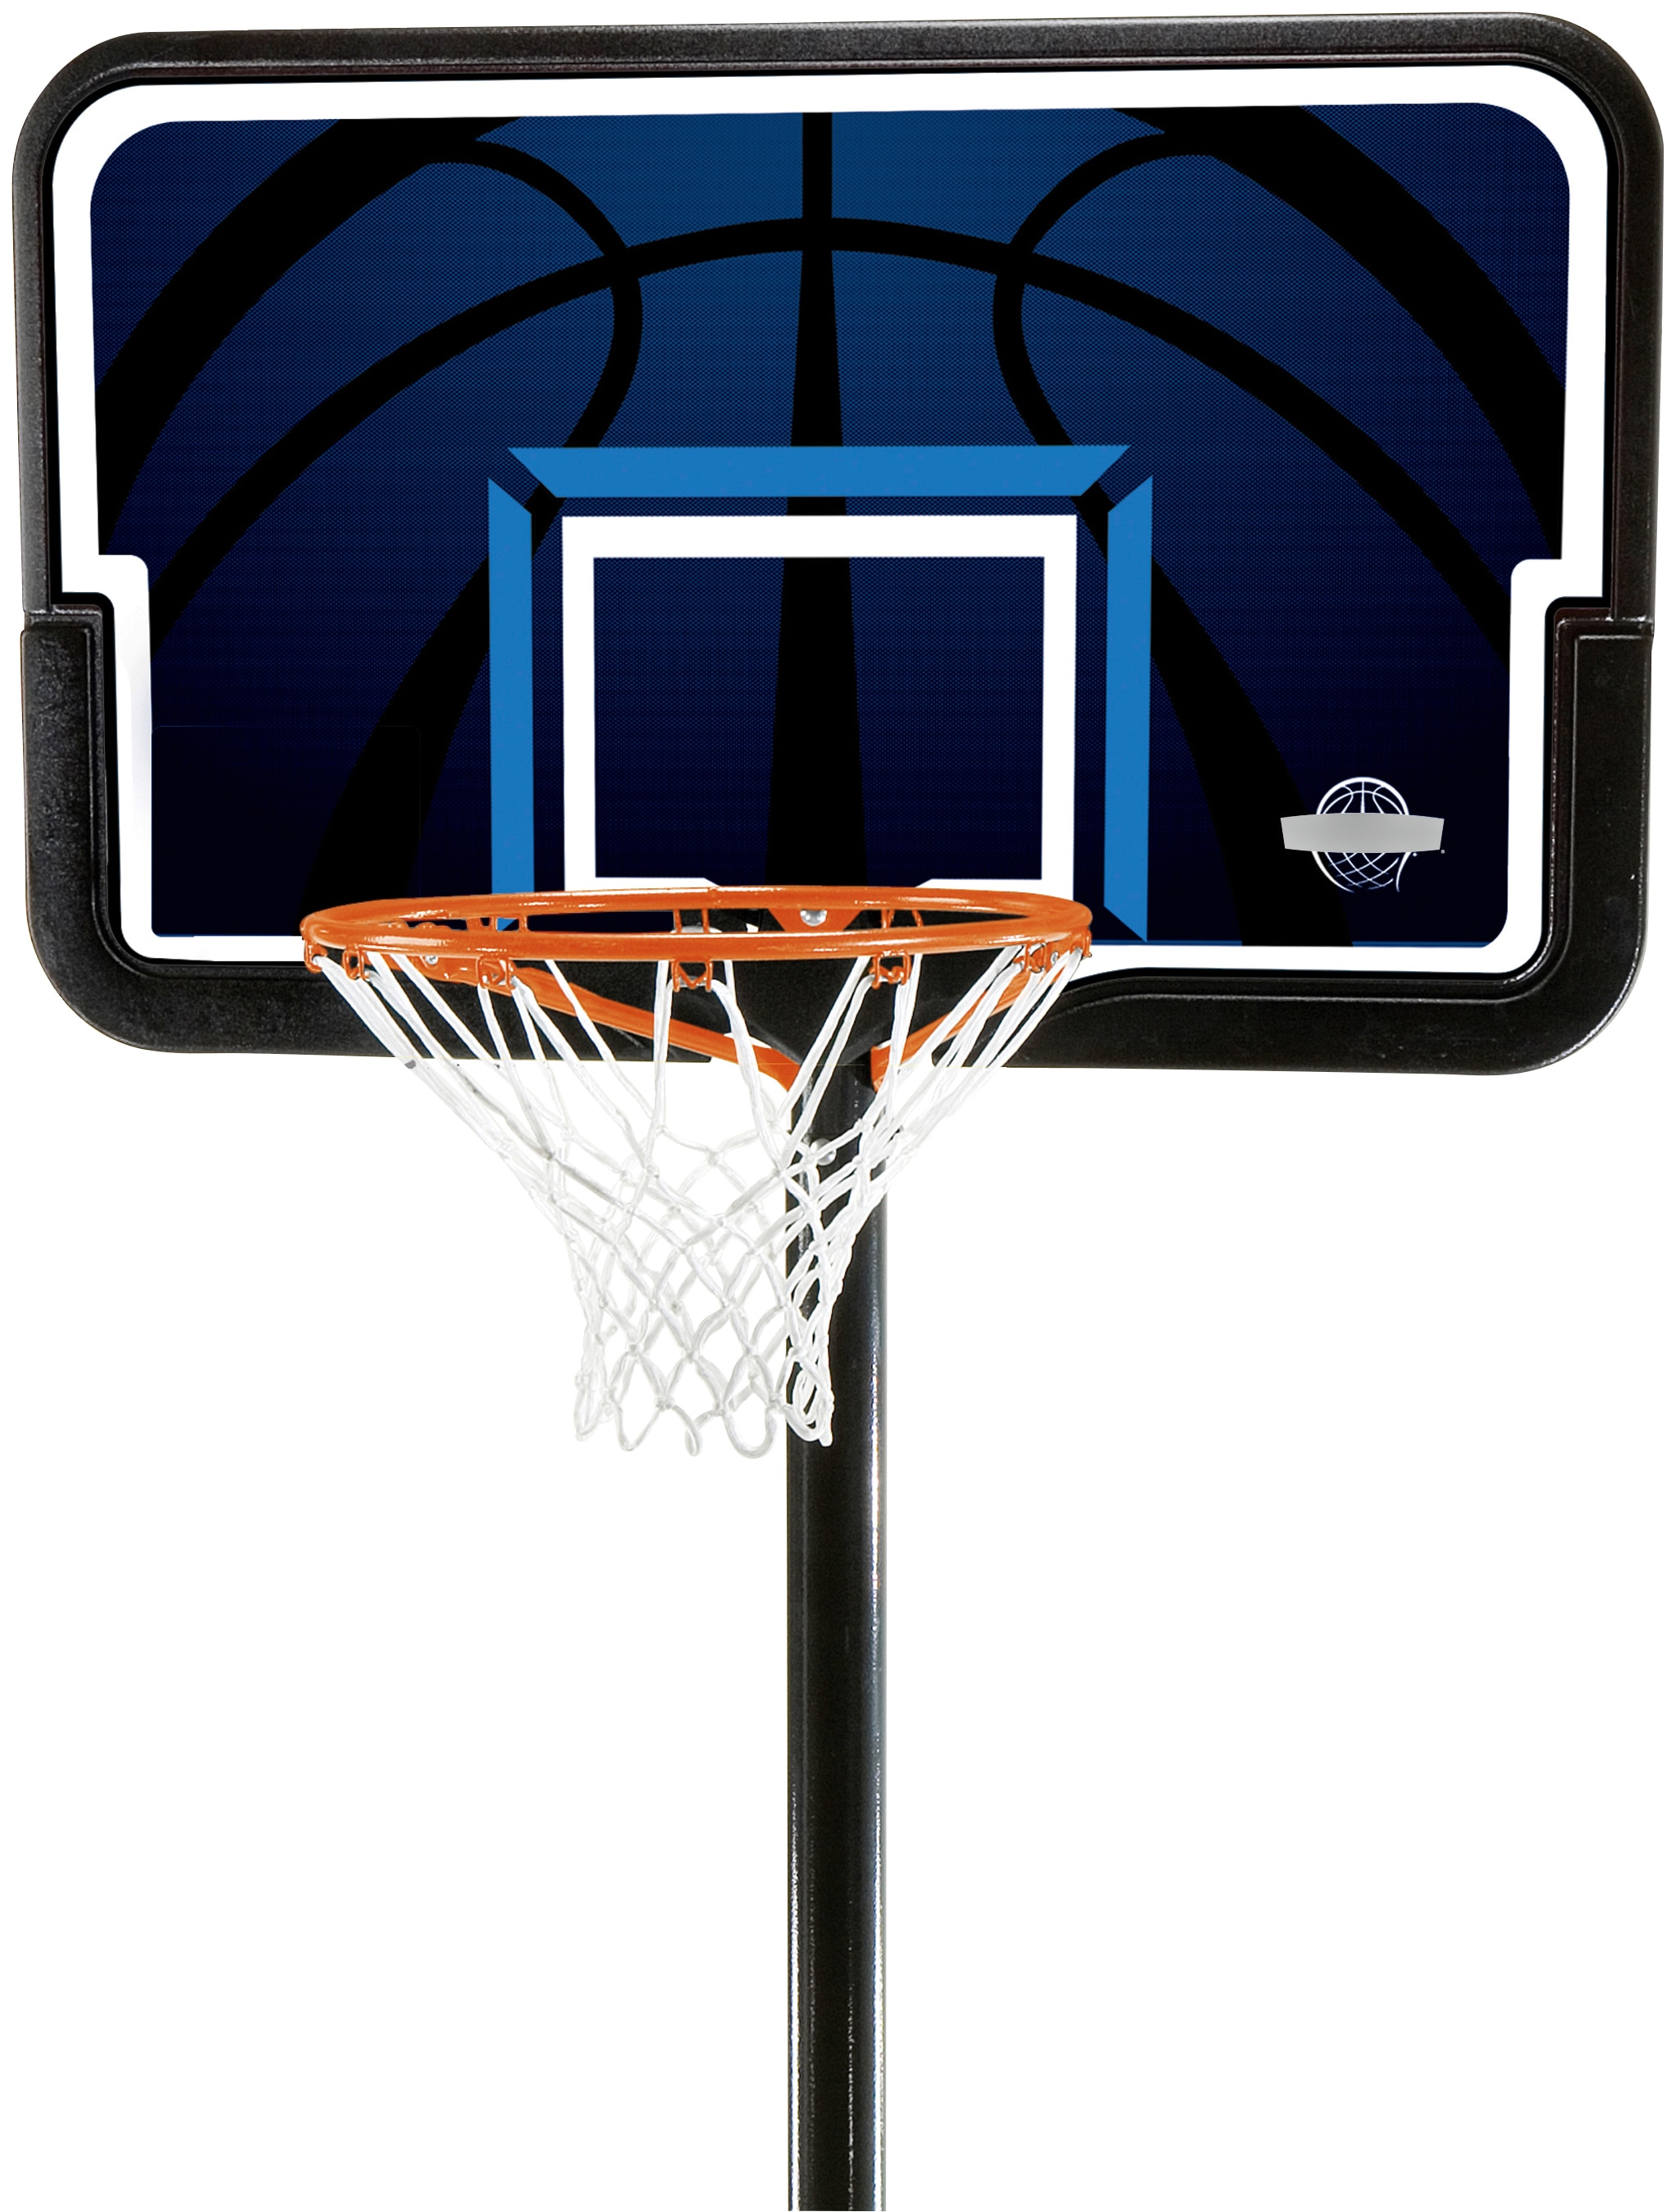 50NRTH Basketballkorb »Nevada«, höhenverstellbar schwarz/blau